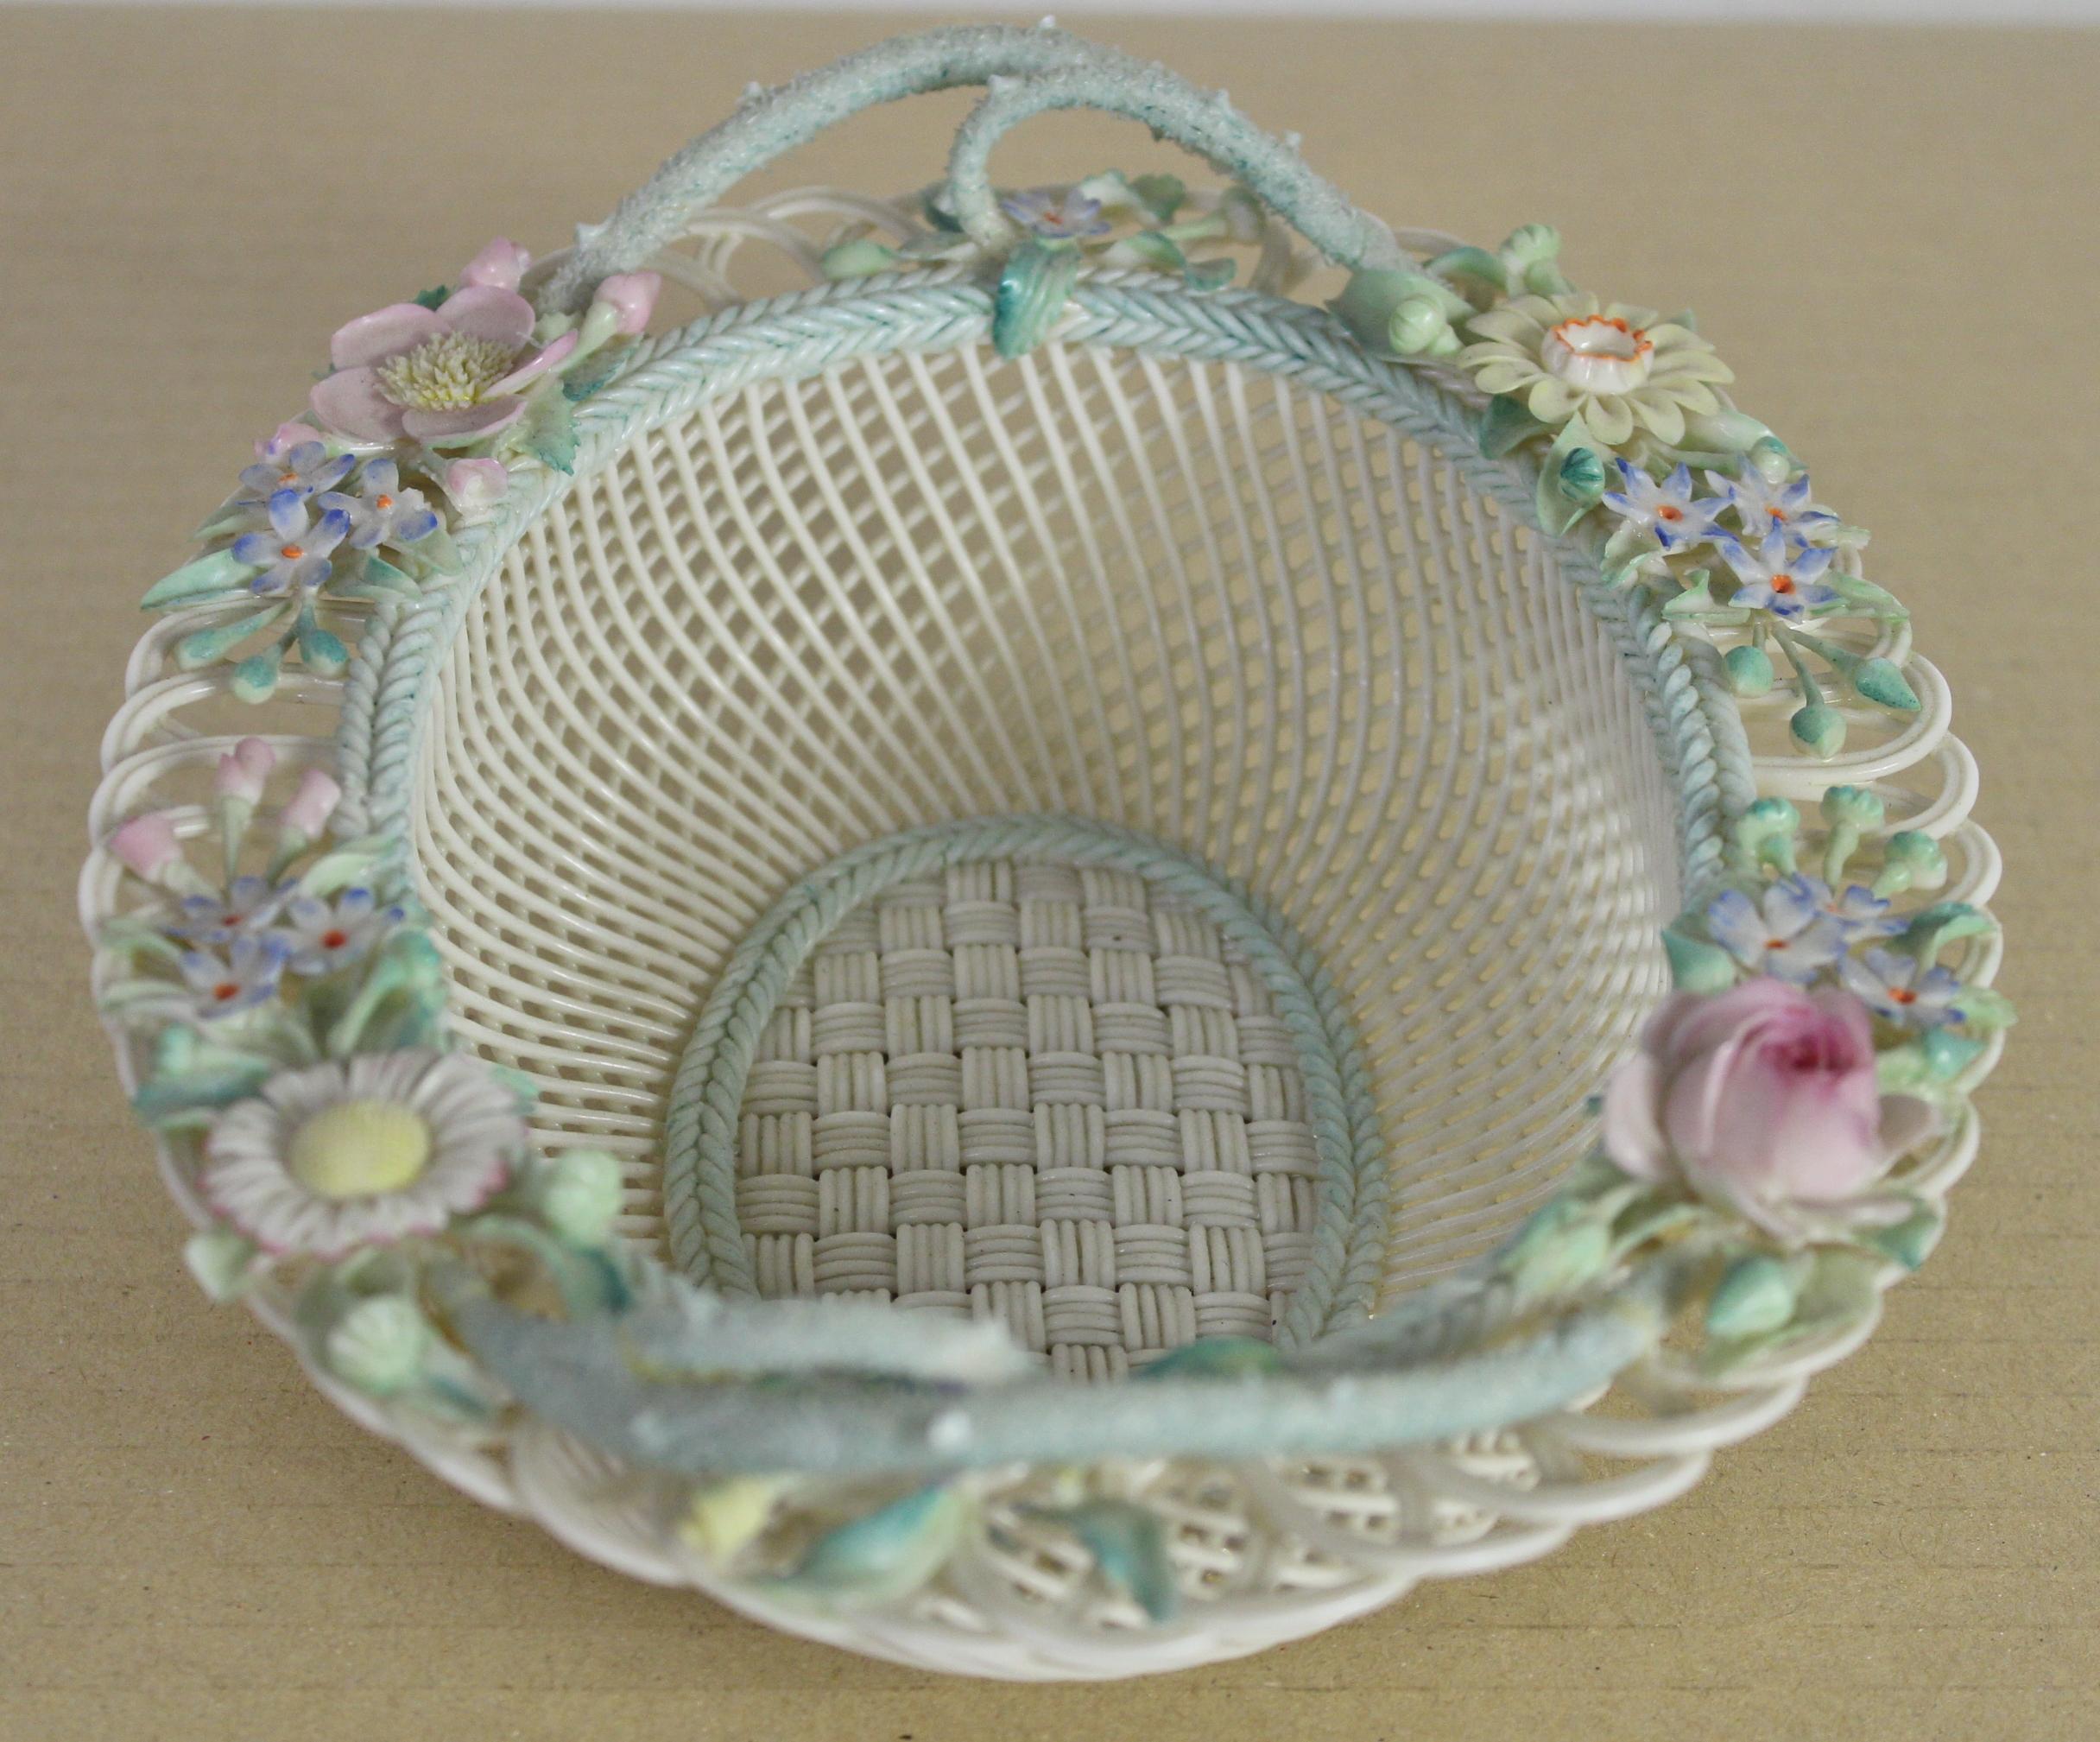 Late 19th Century Large Belleek Floral Decorated Porcelain Basket For Sale 6